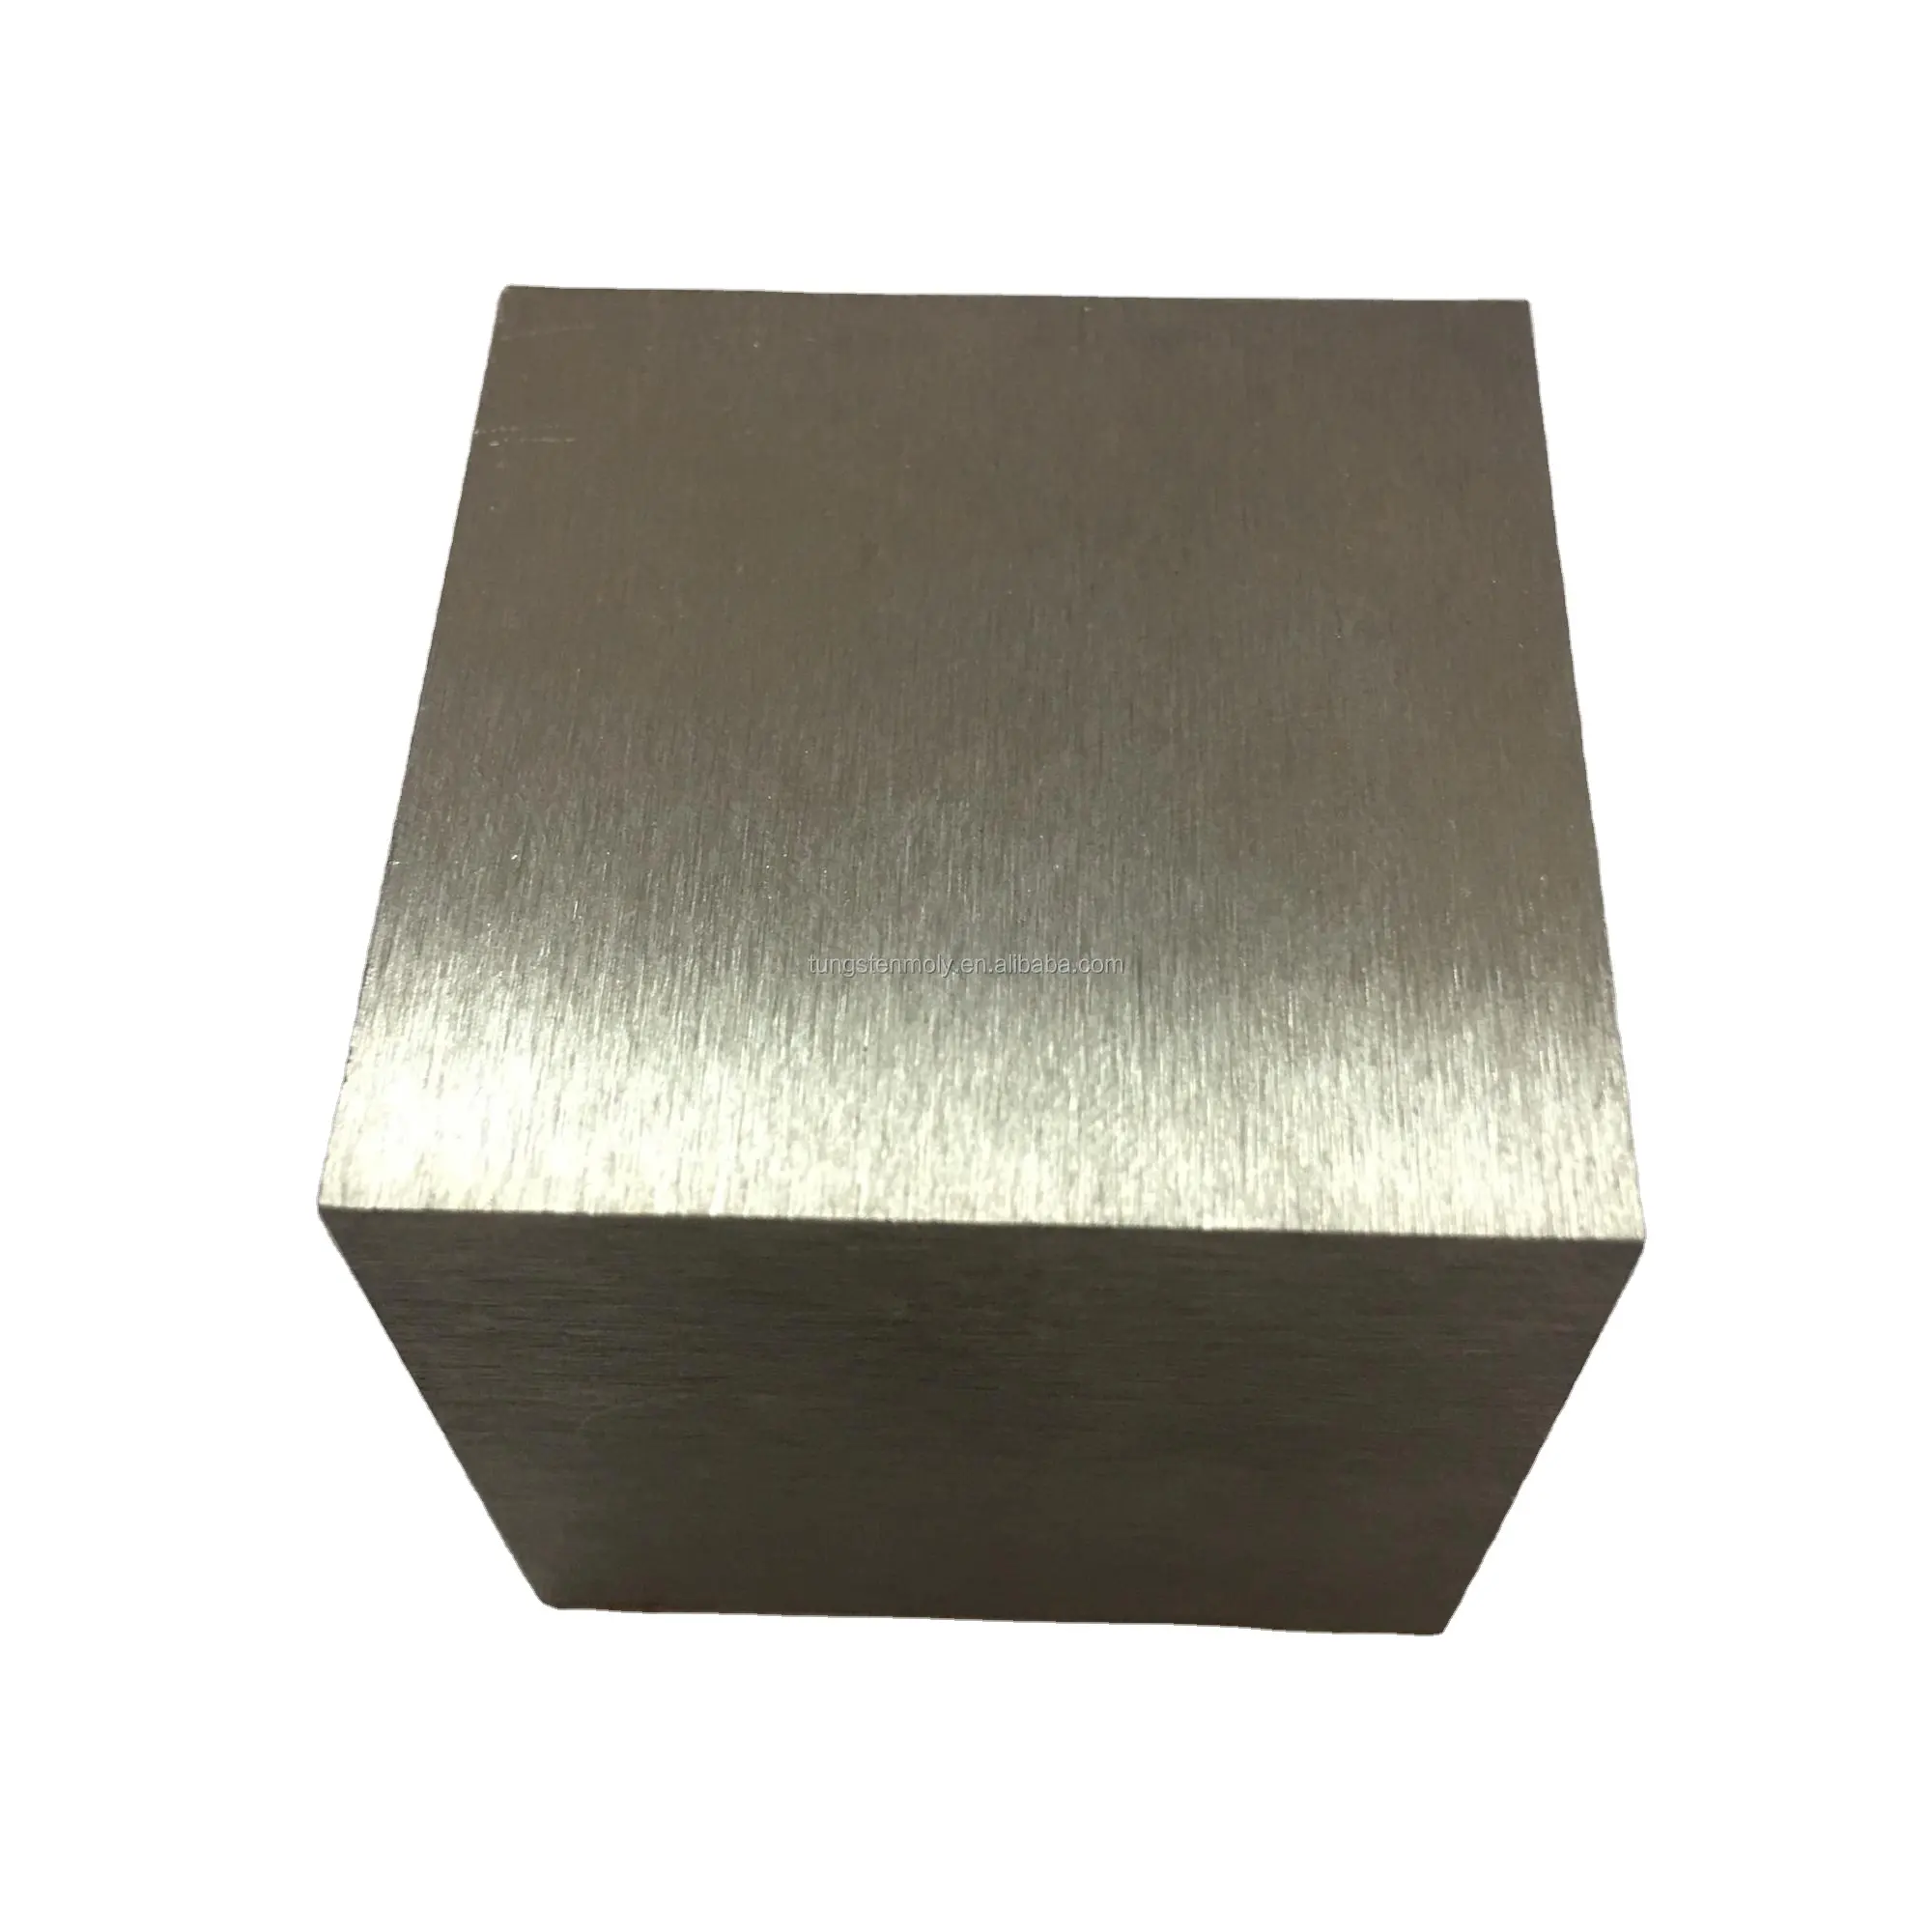 Pabrik grosir Kontra balance berat 1 kg tungsten cube